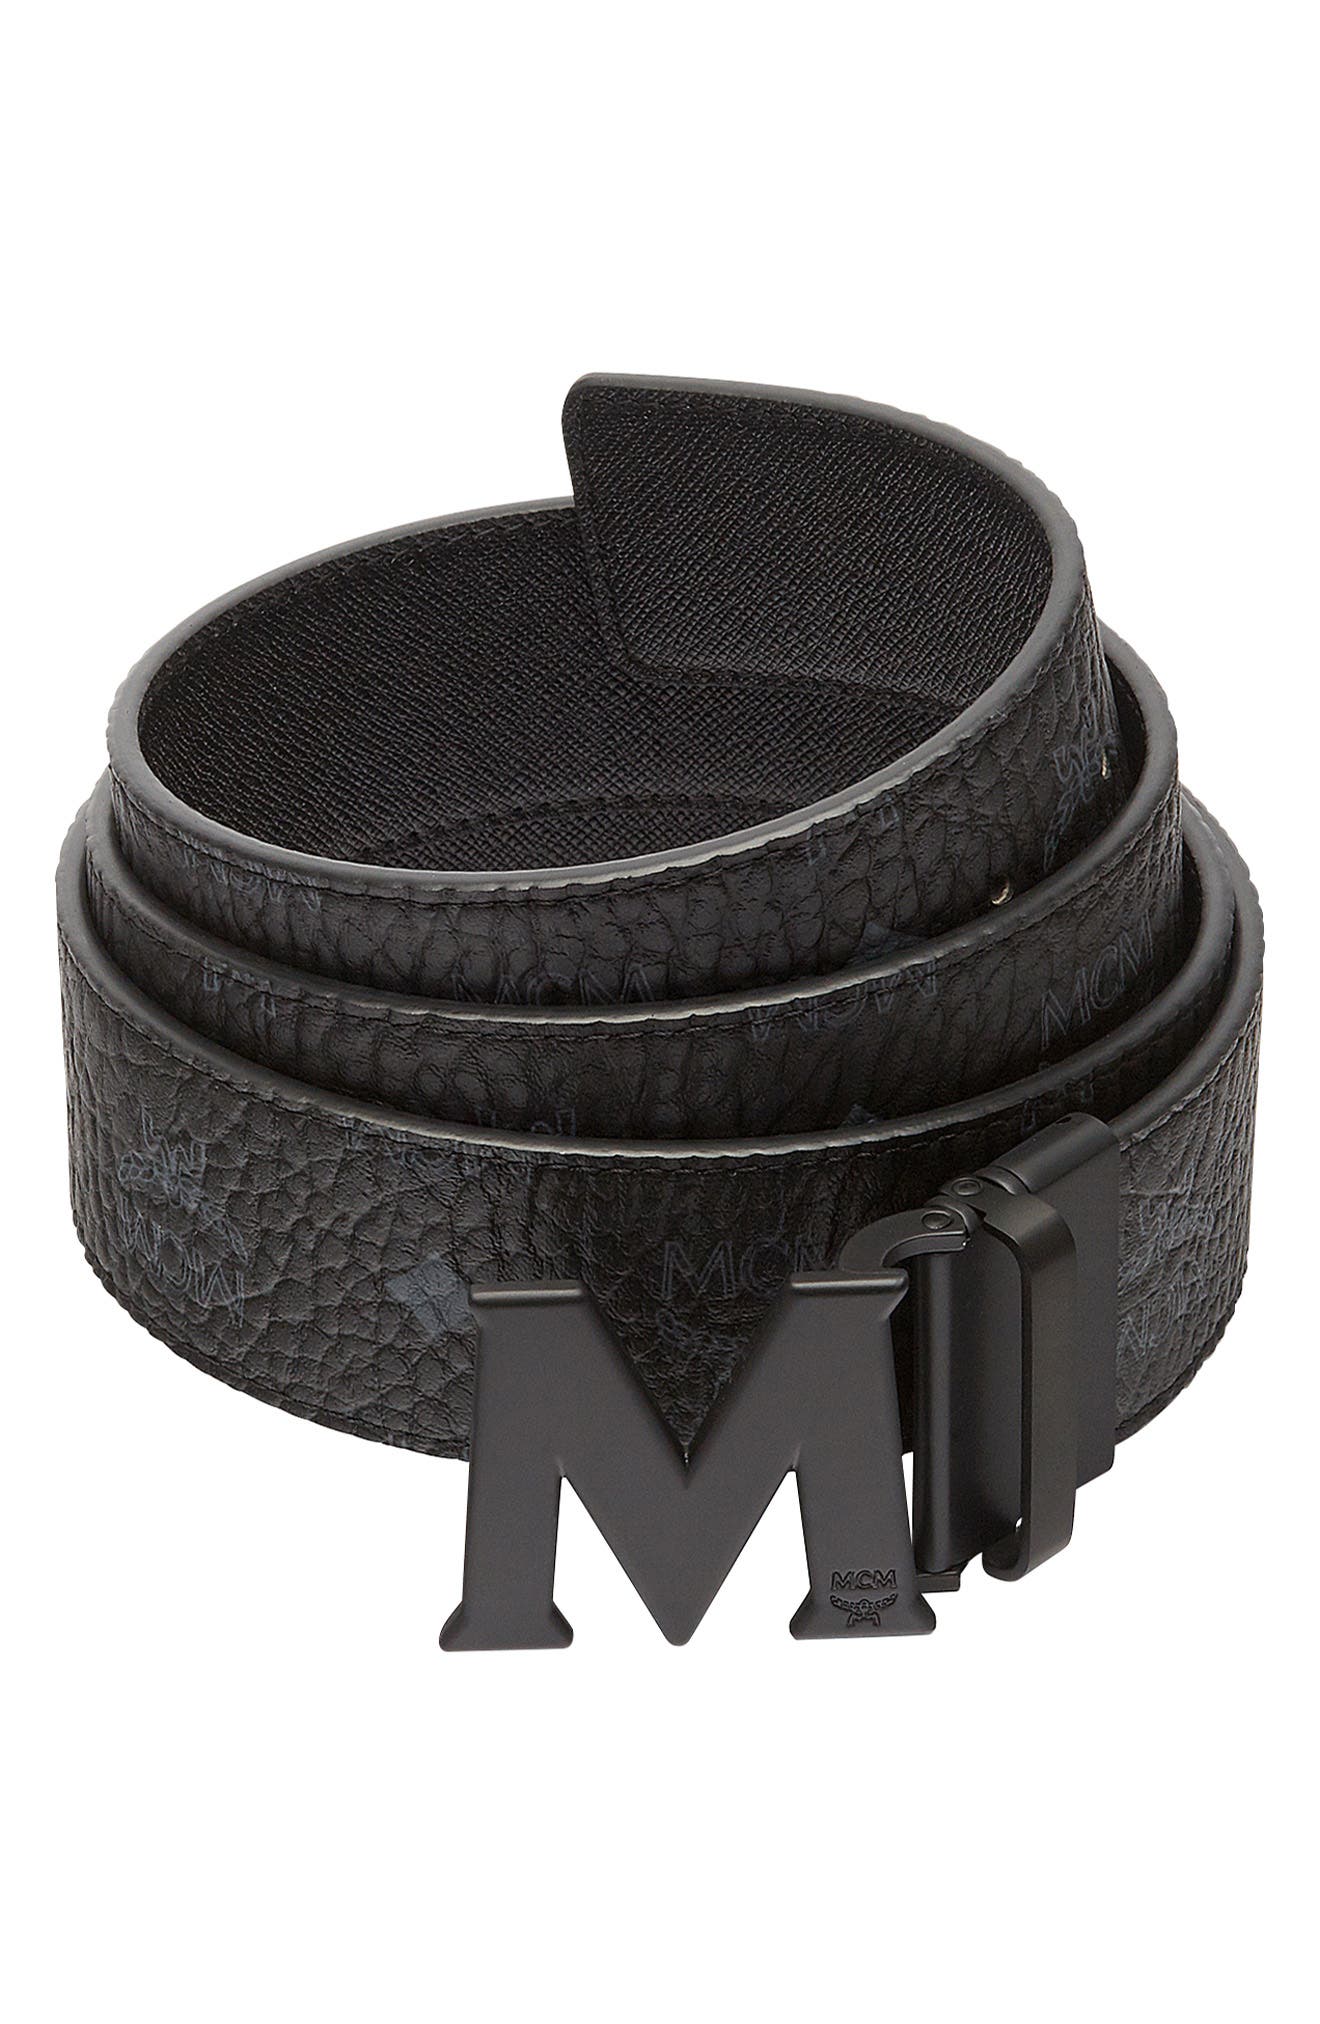 MCM Logo Buckle Reversible Belt in Black at Nordstrom